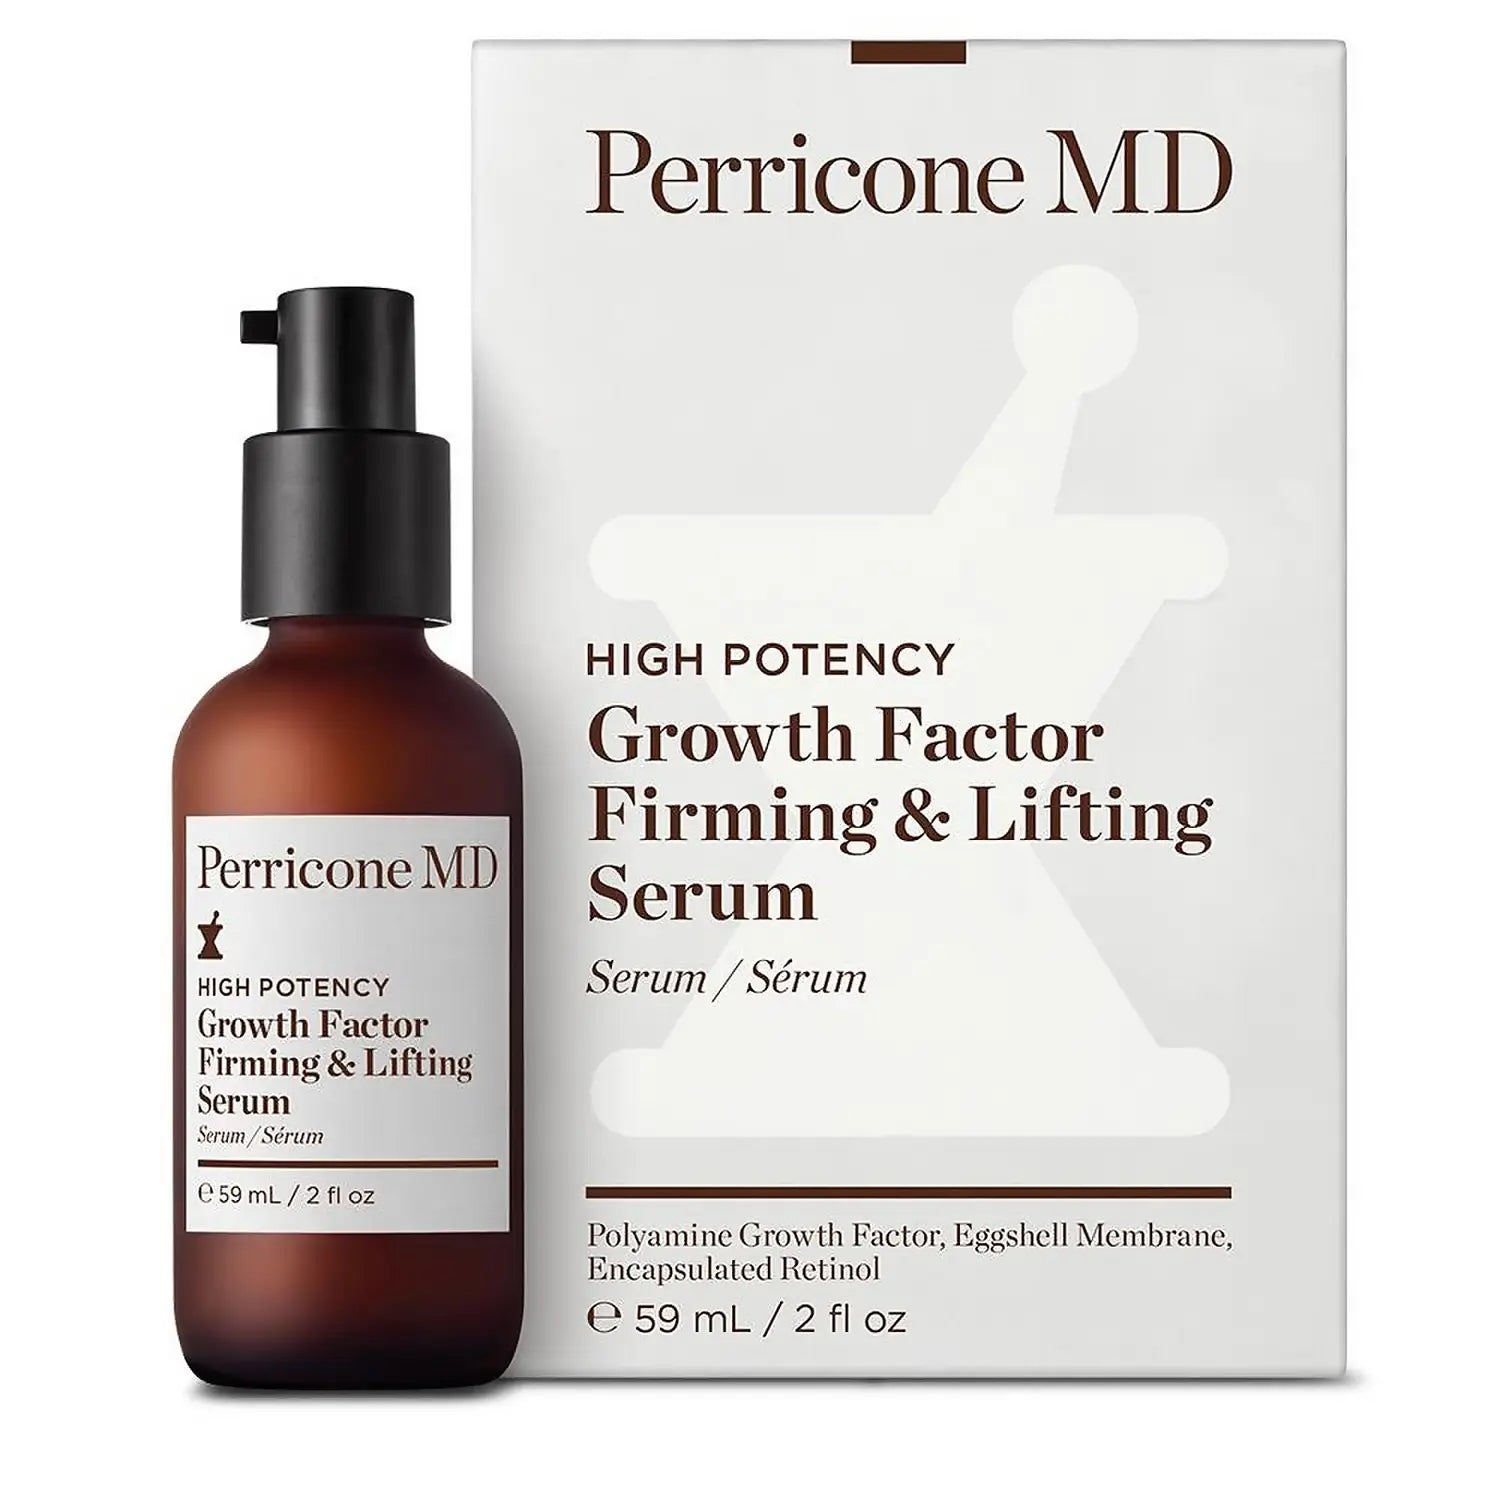 Perricone MD High Potency Firming & Lifting Serum